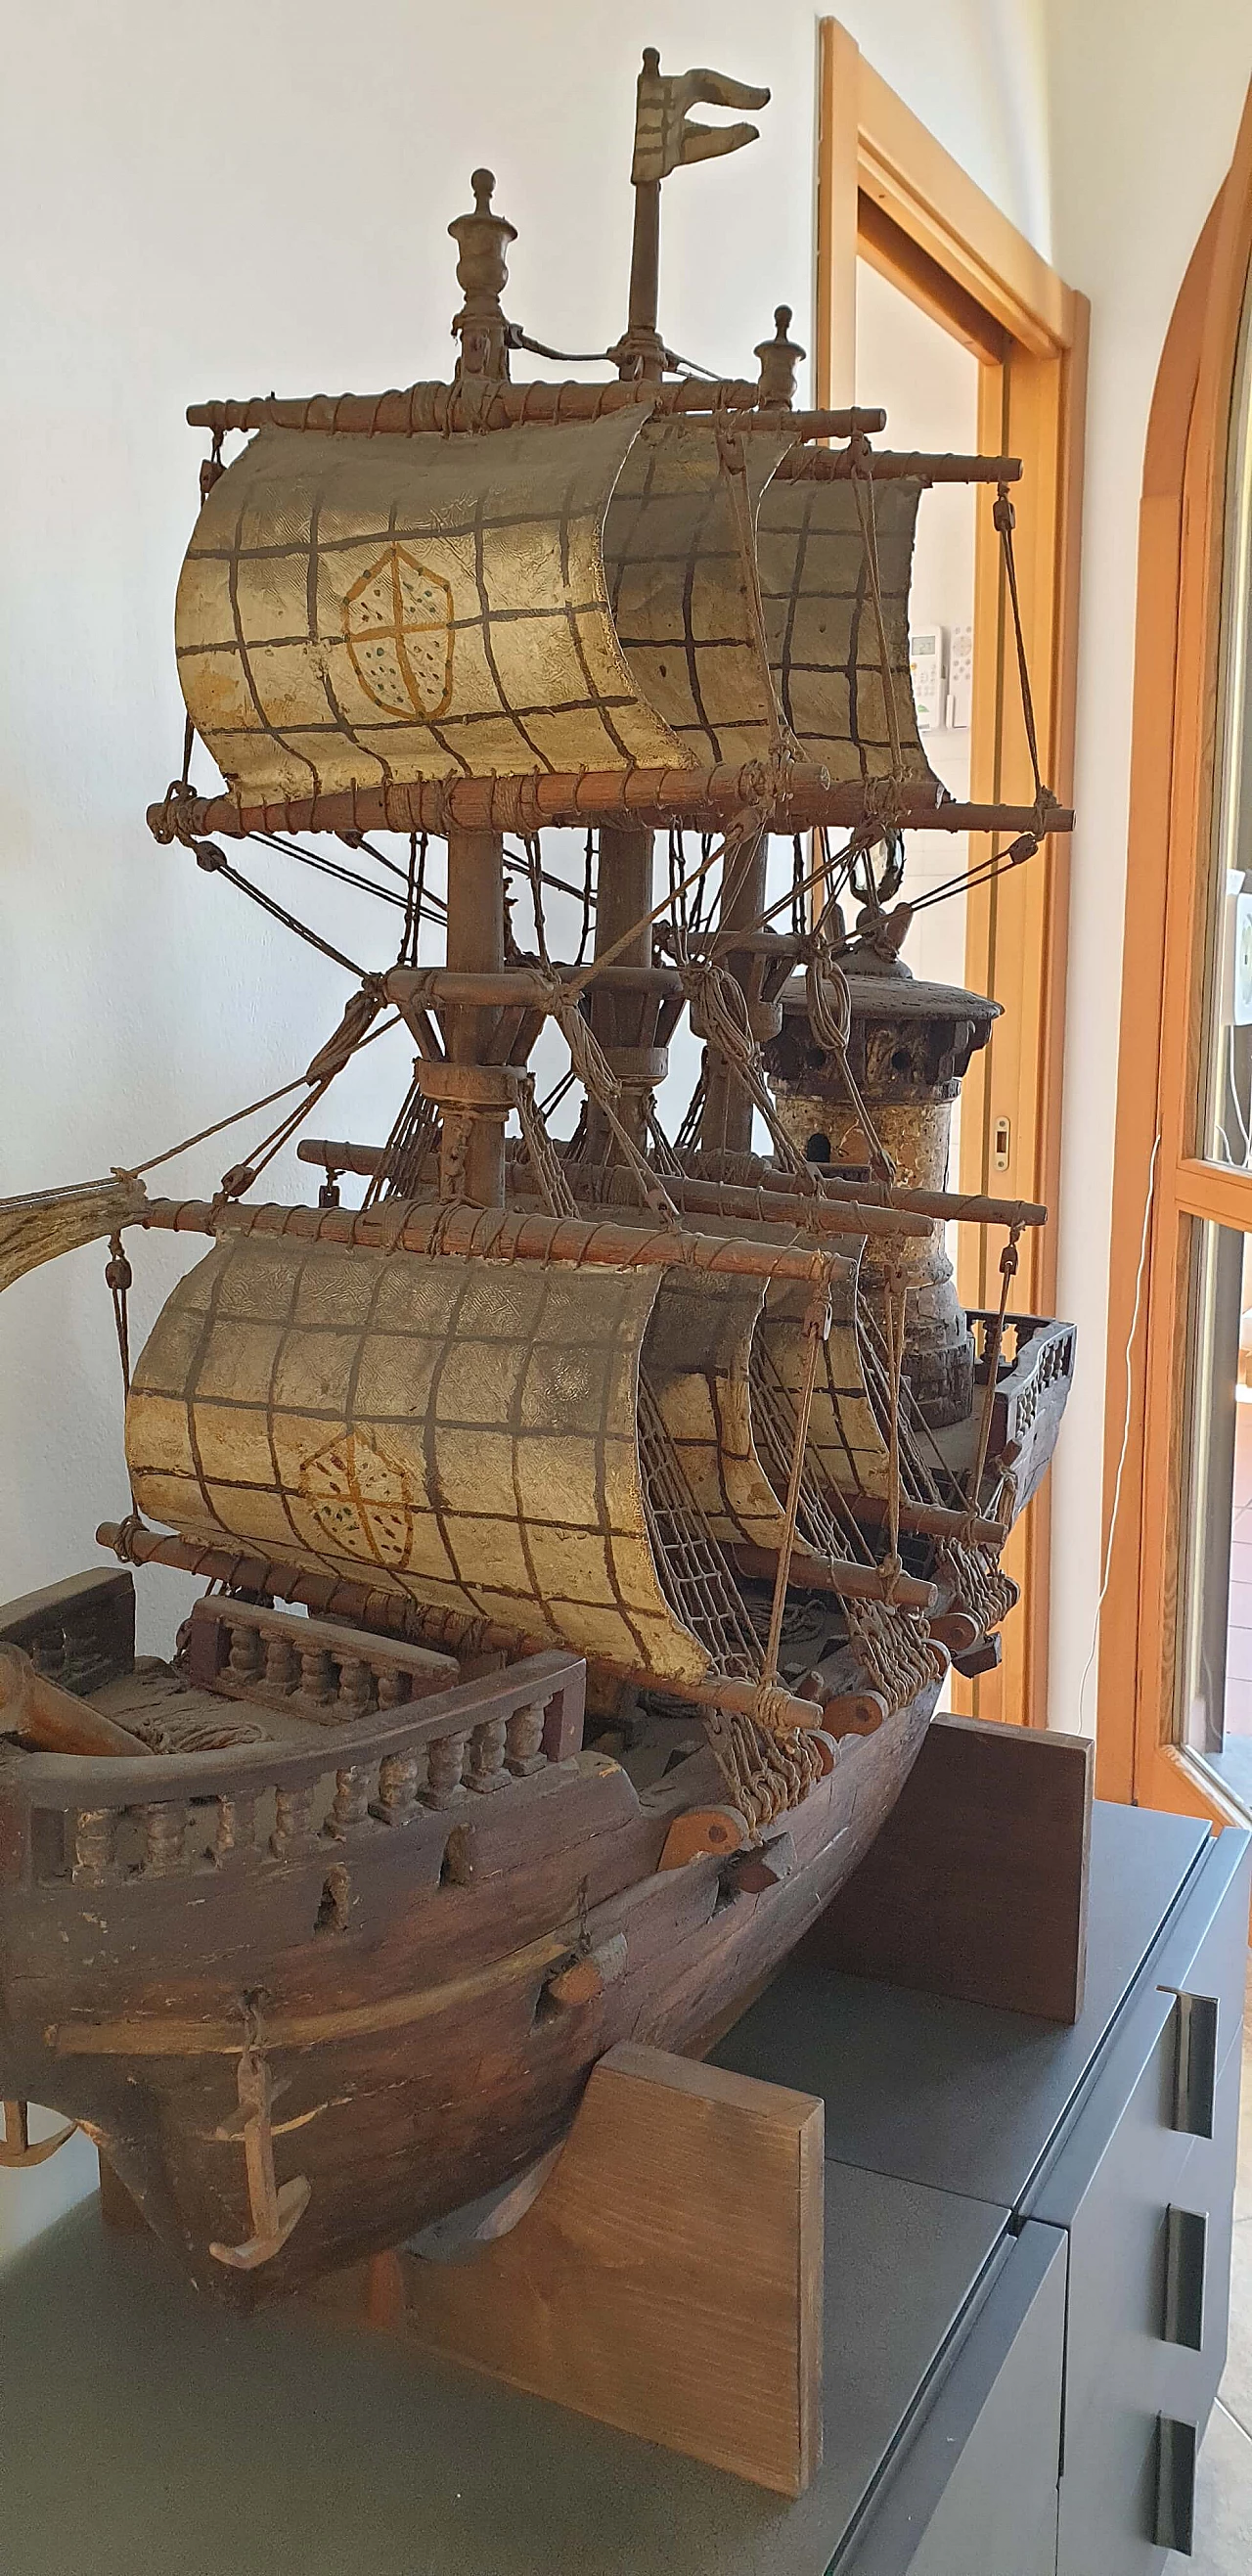 Louis XIV wooden model sailing ship, 17th century 6